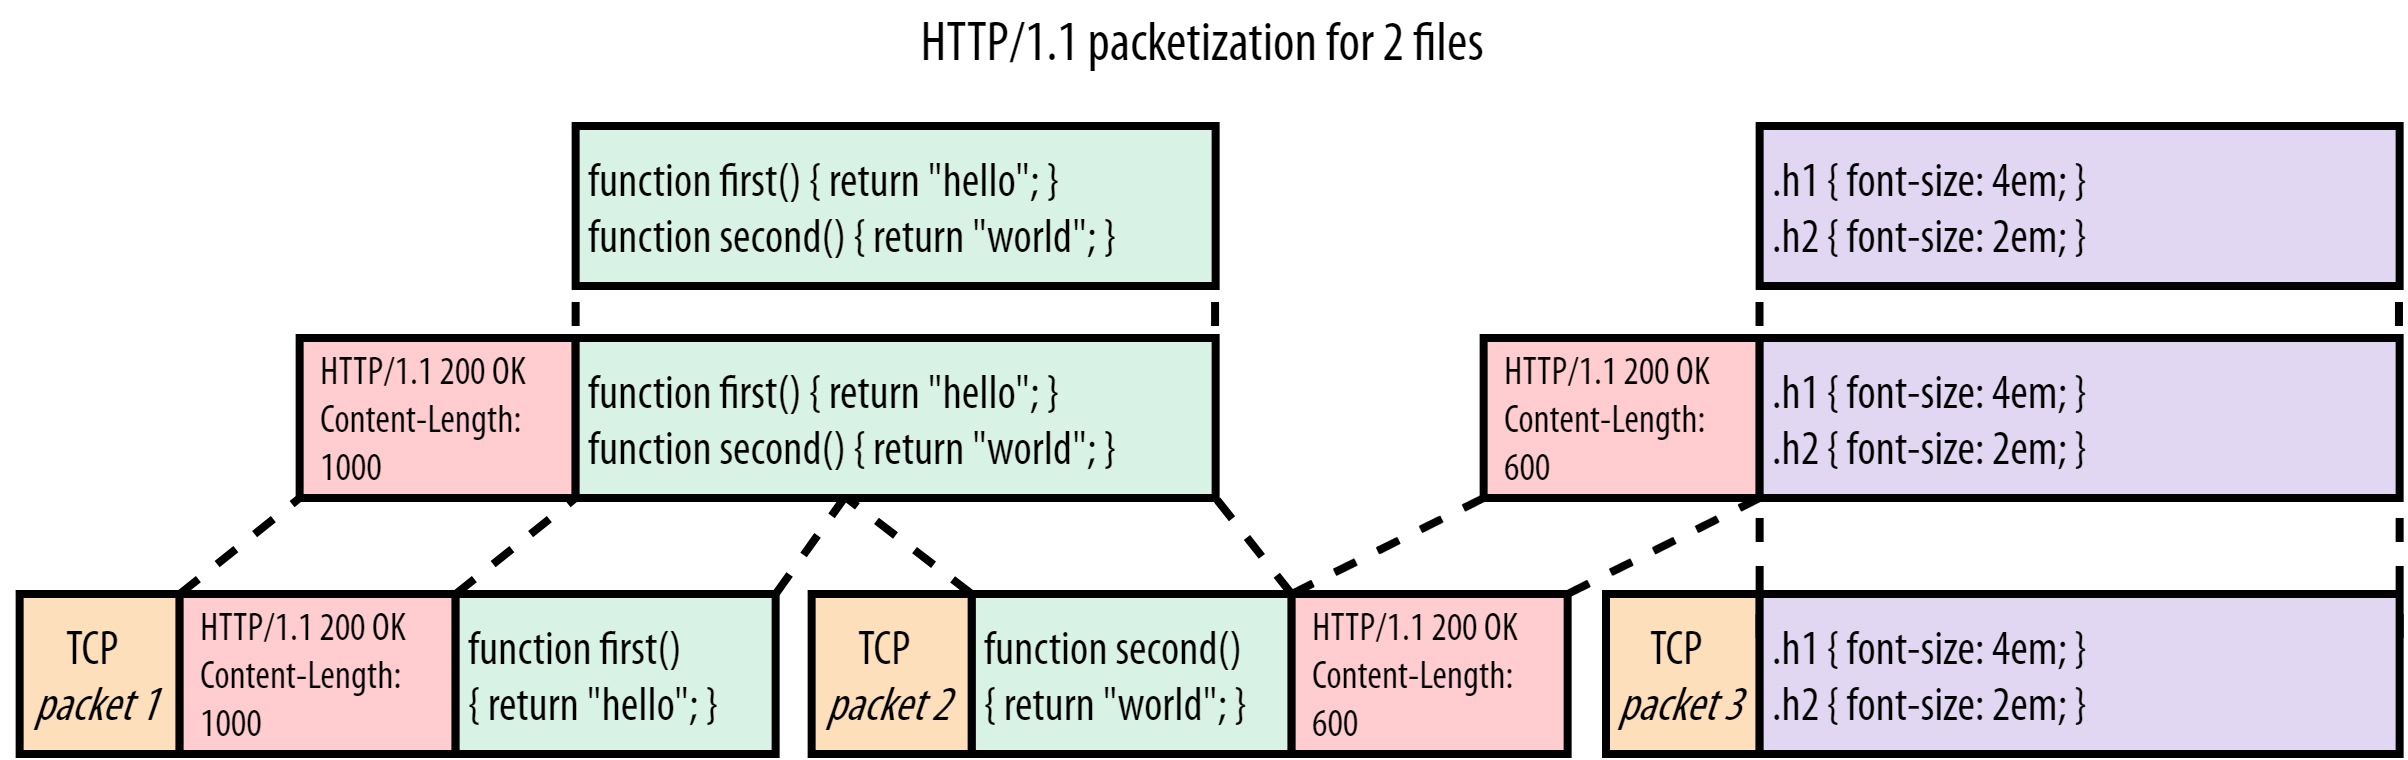 HTTP1 em pacotes TCP